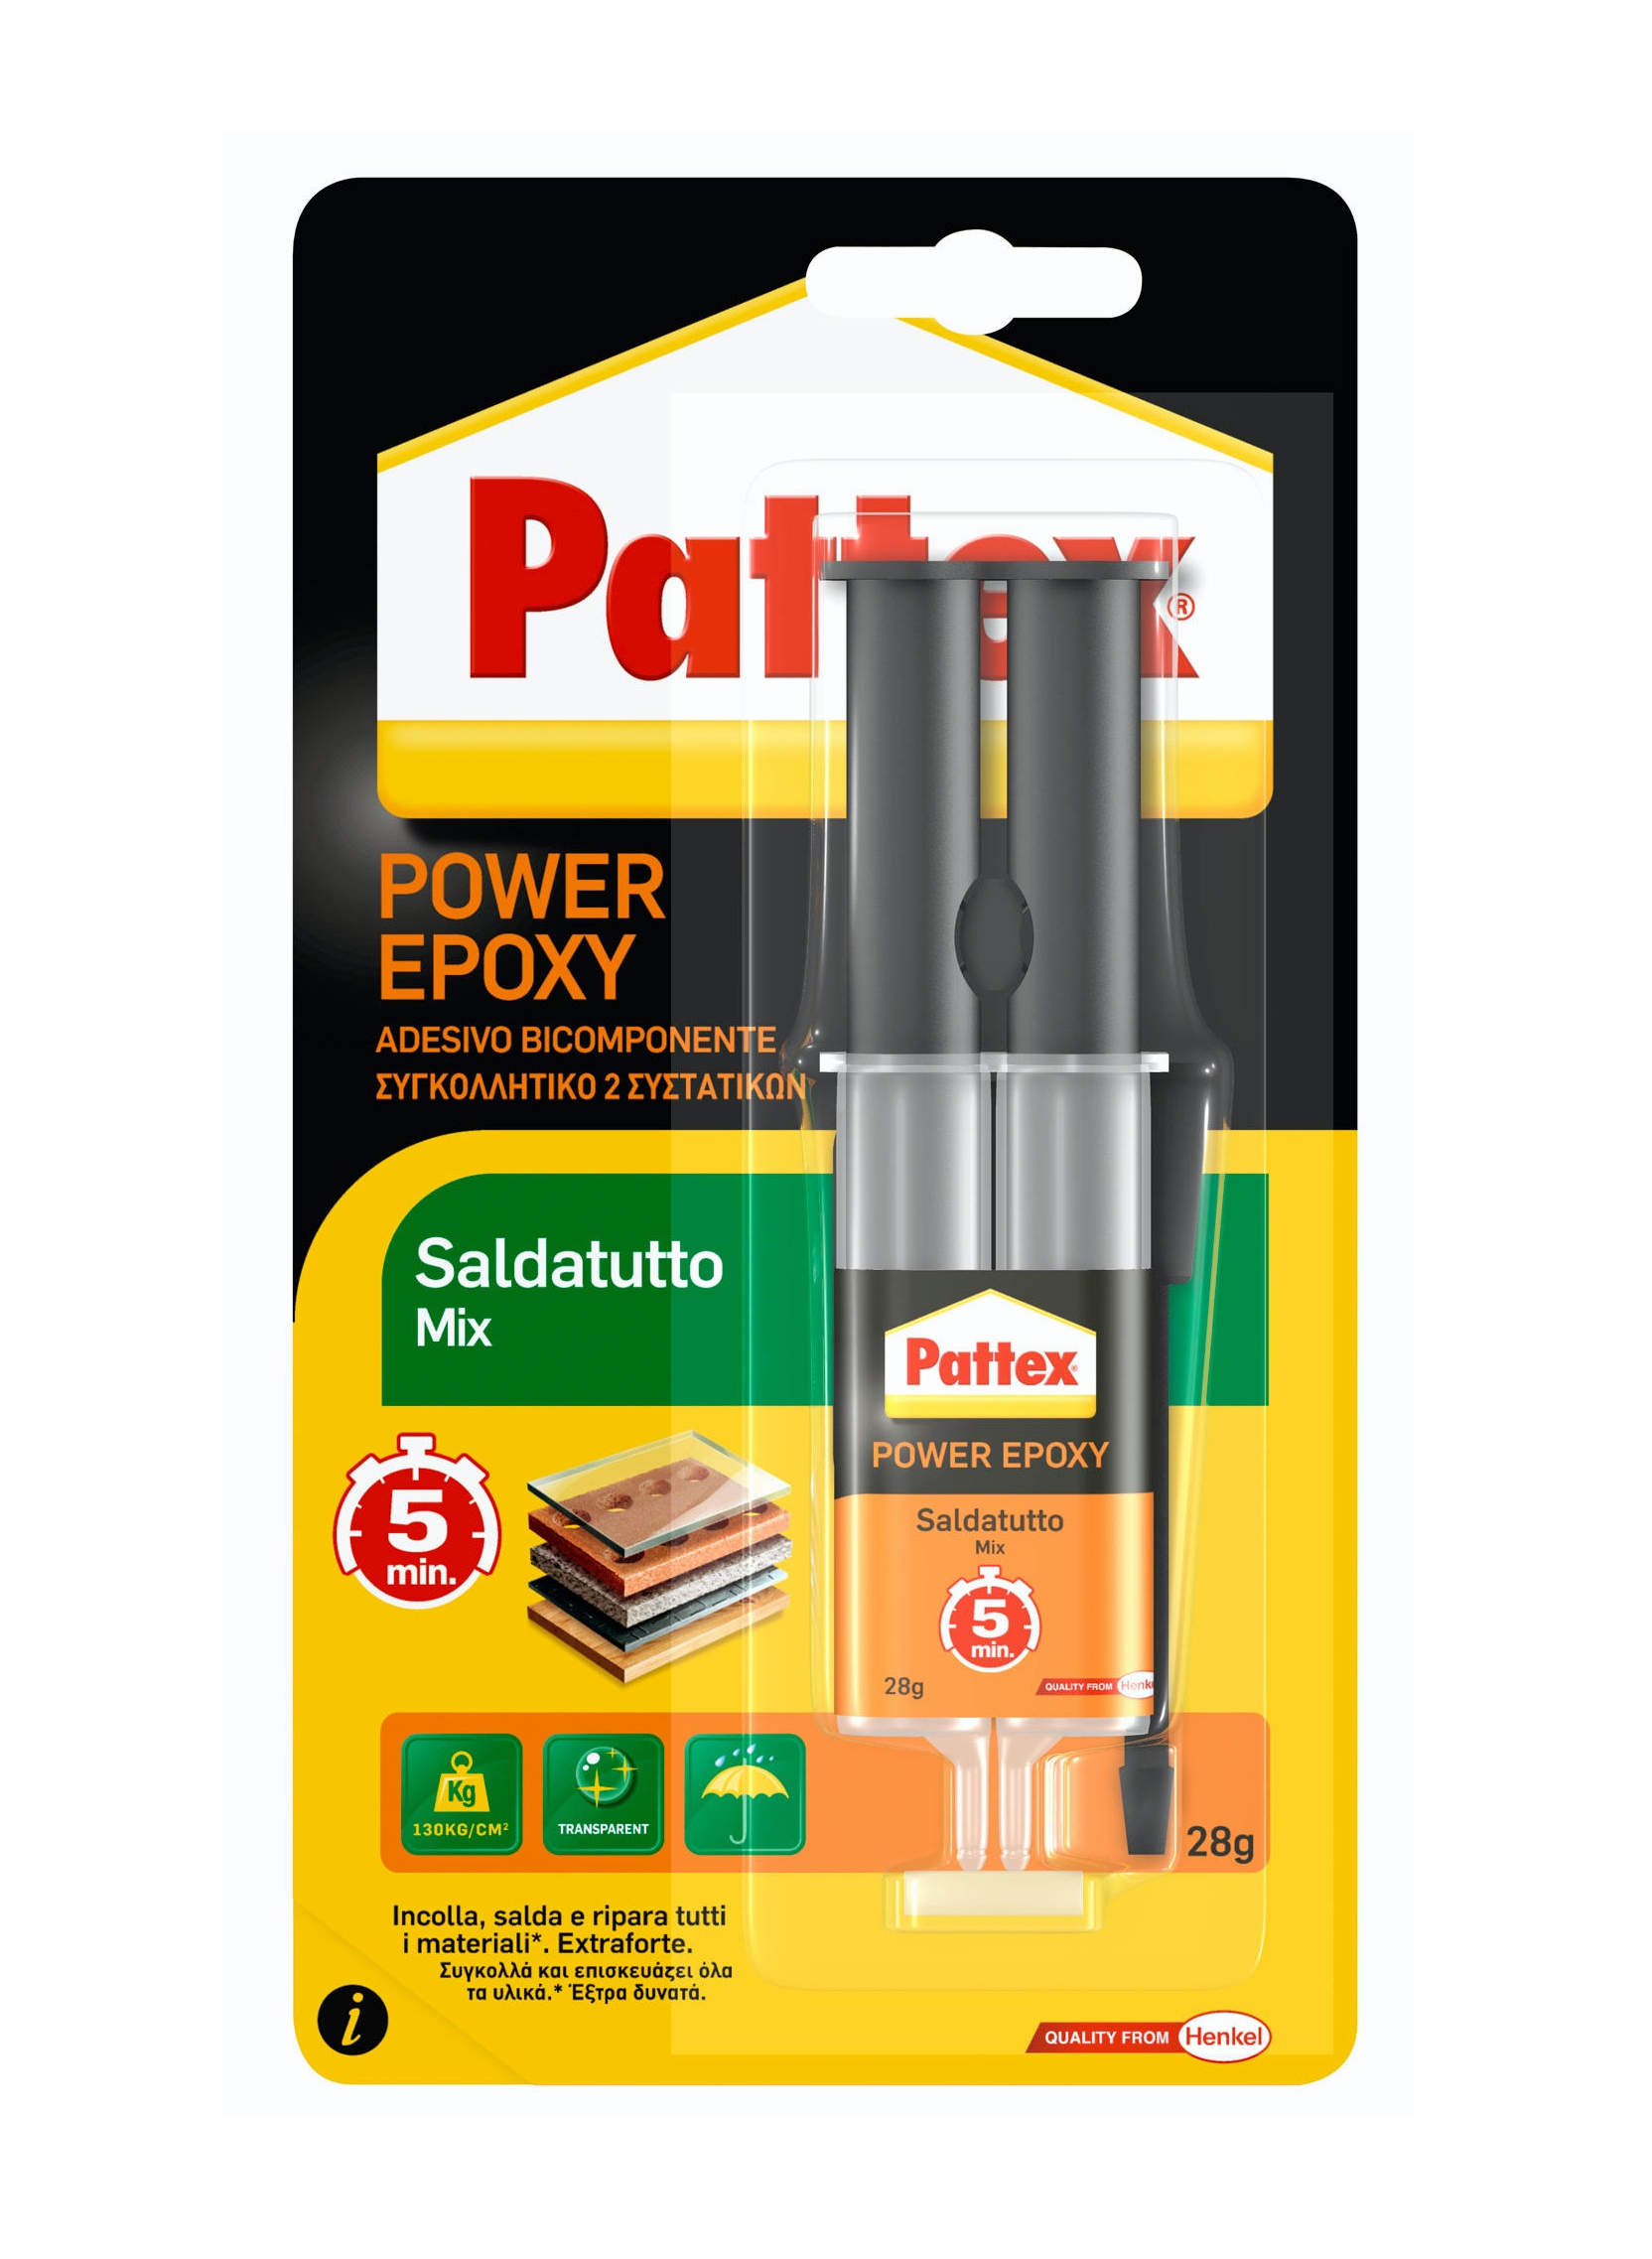 Pattex power epoxy saldatutto mix sy 28g